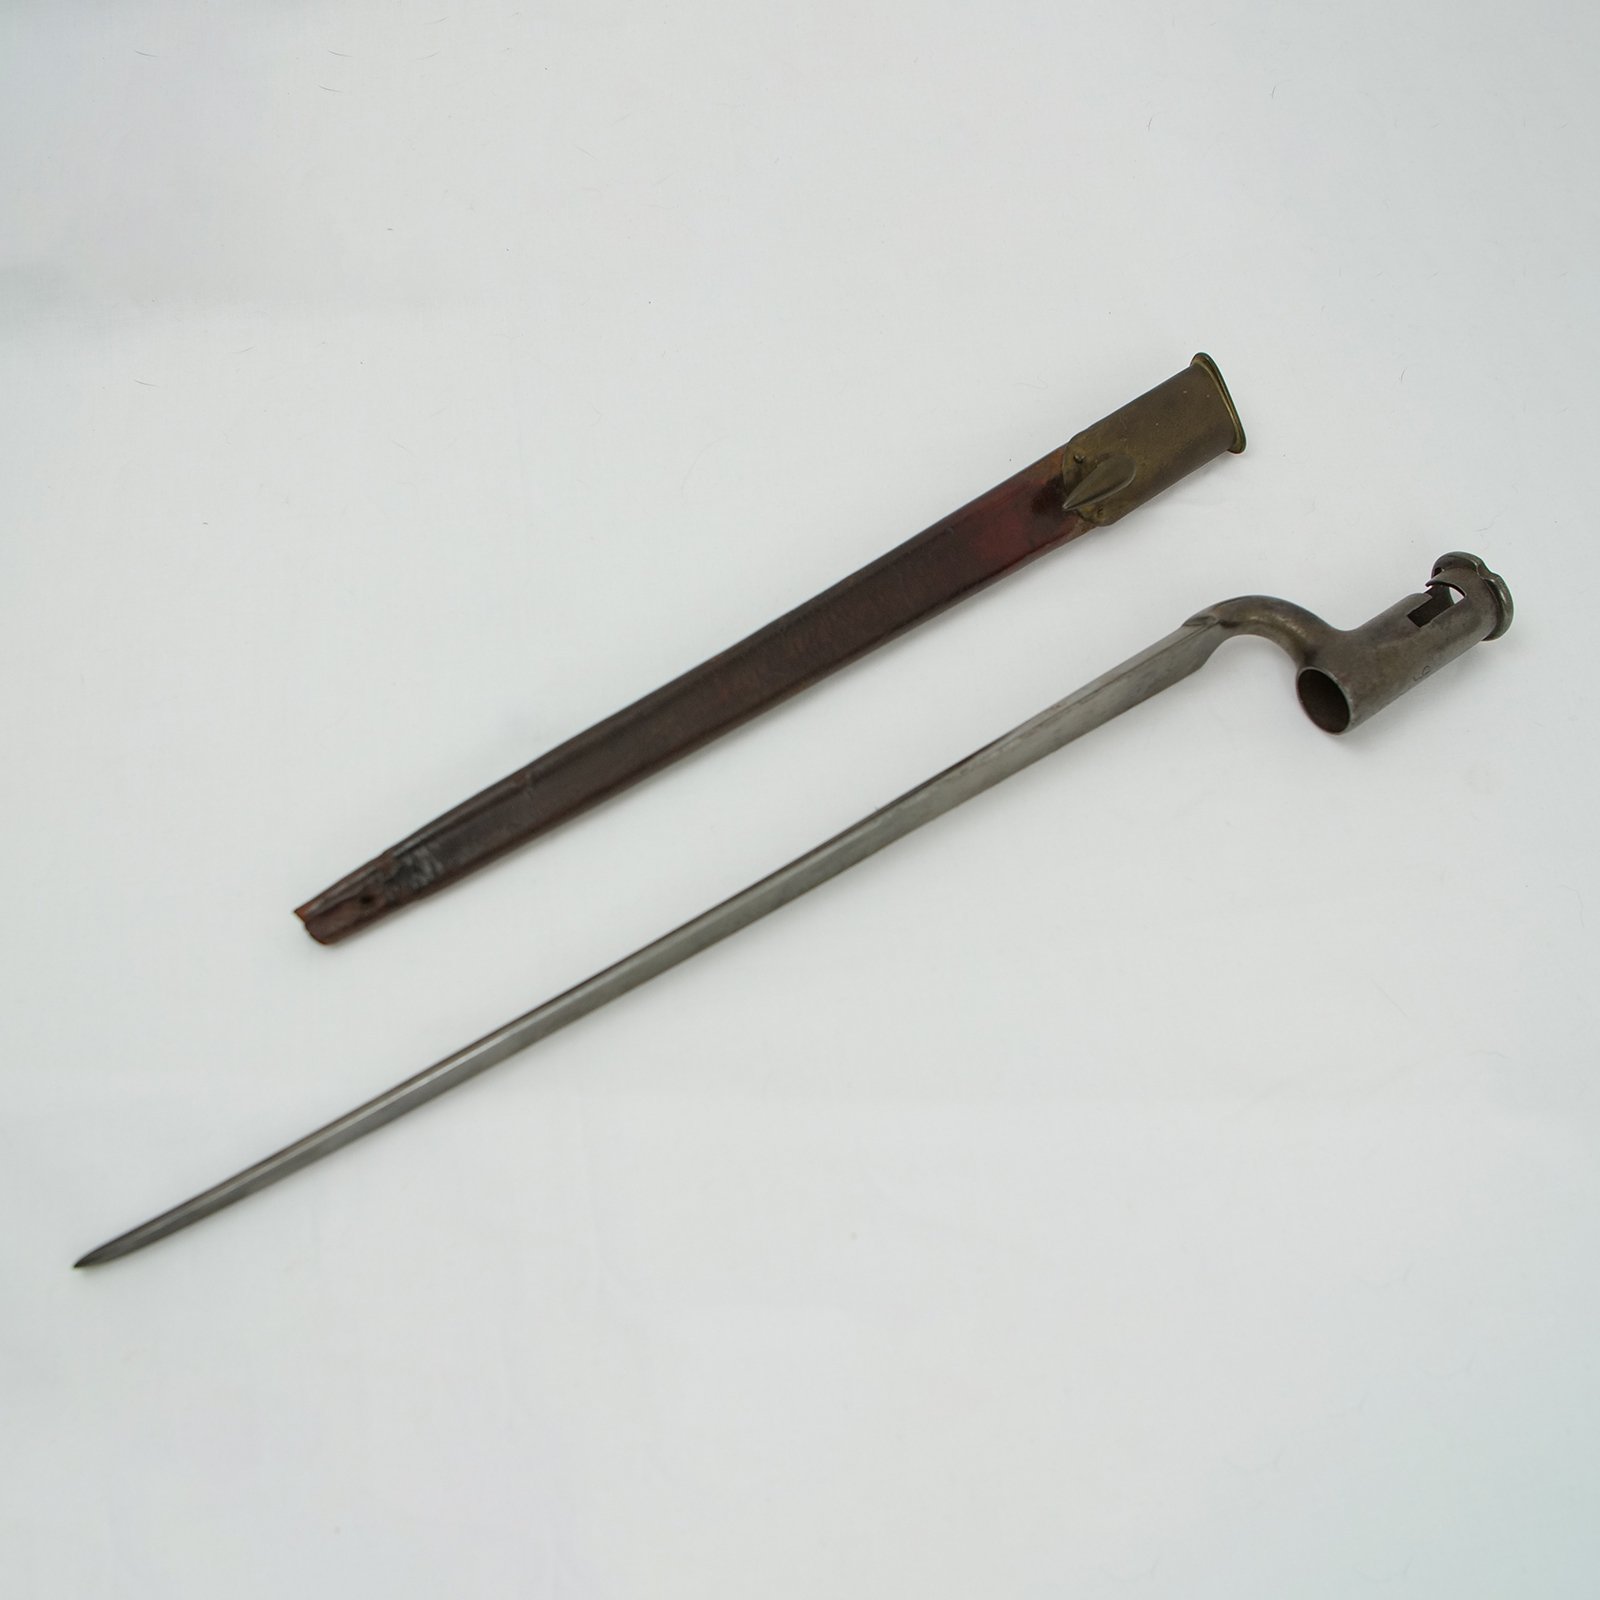 Bodák, bajonet, používaný v Anglii v období zhruba 1730-1850 – JakeOwenPowell / Shutterstock